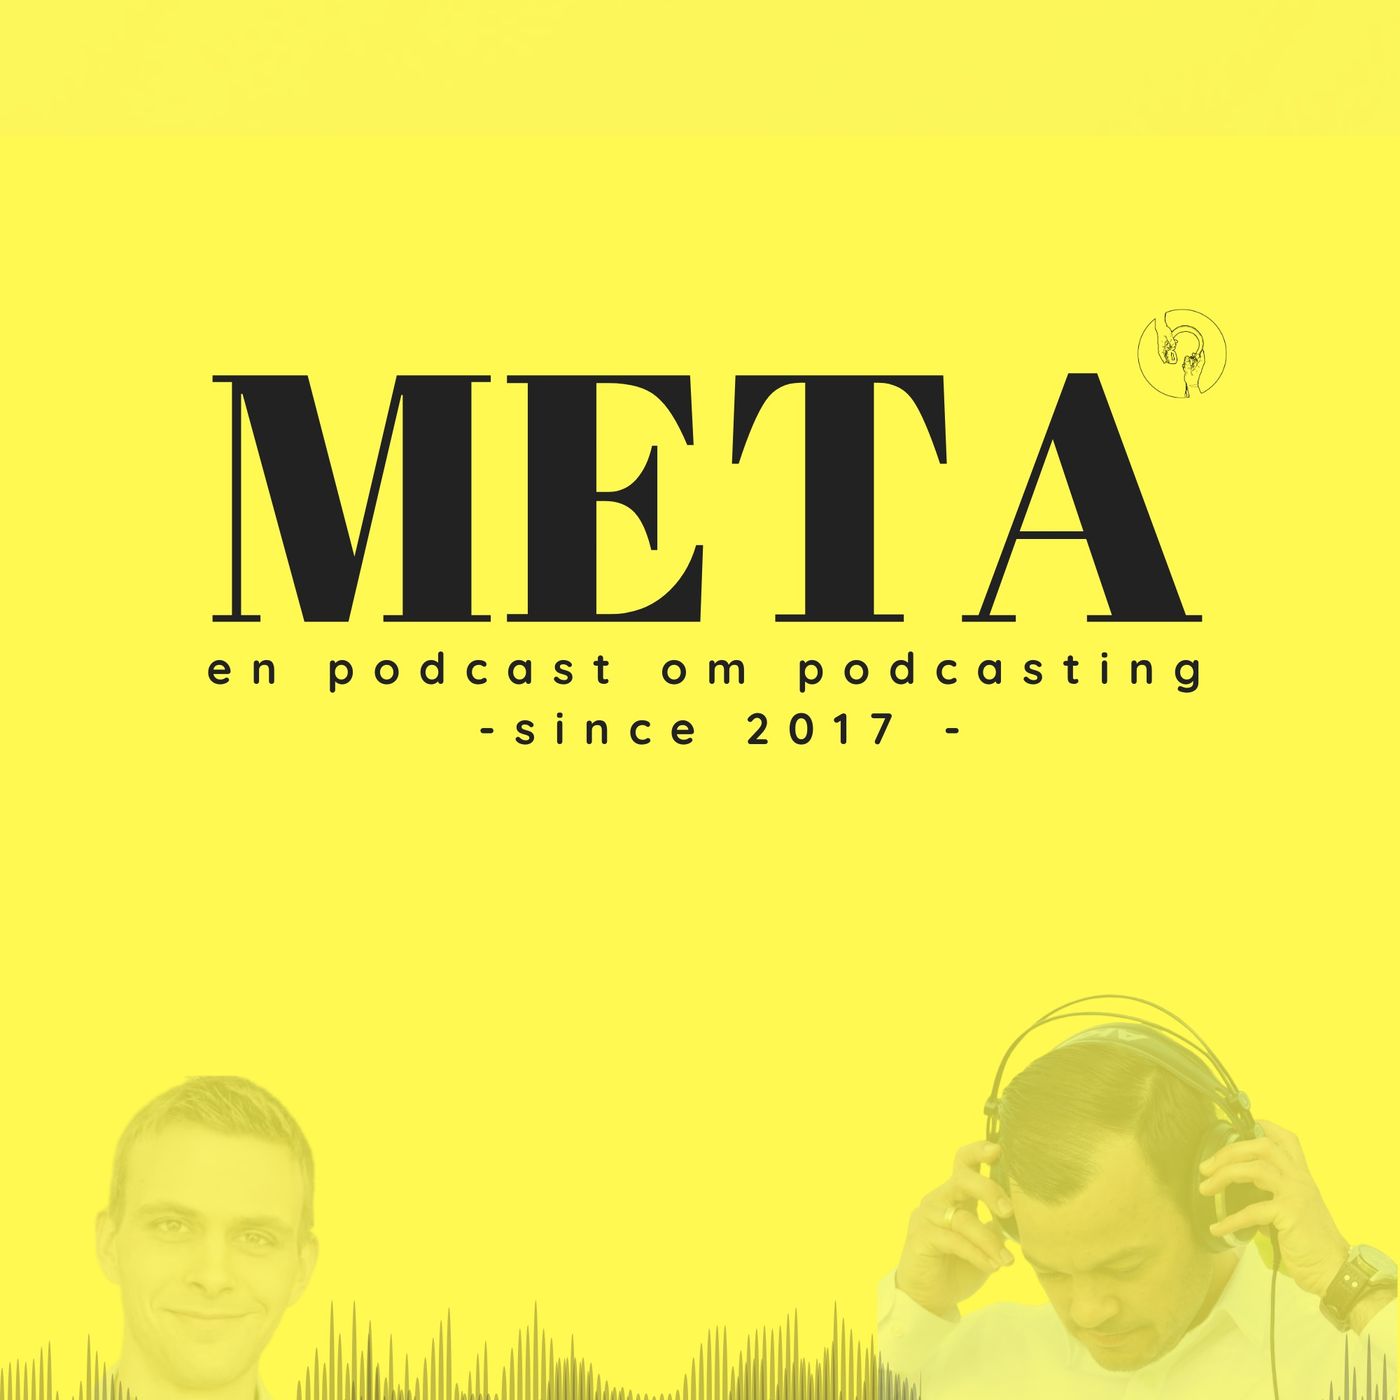 META - en podcast om podcasting